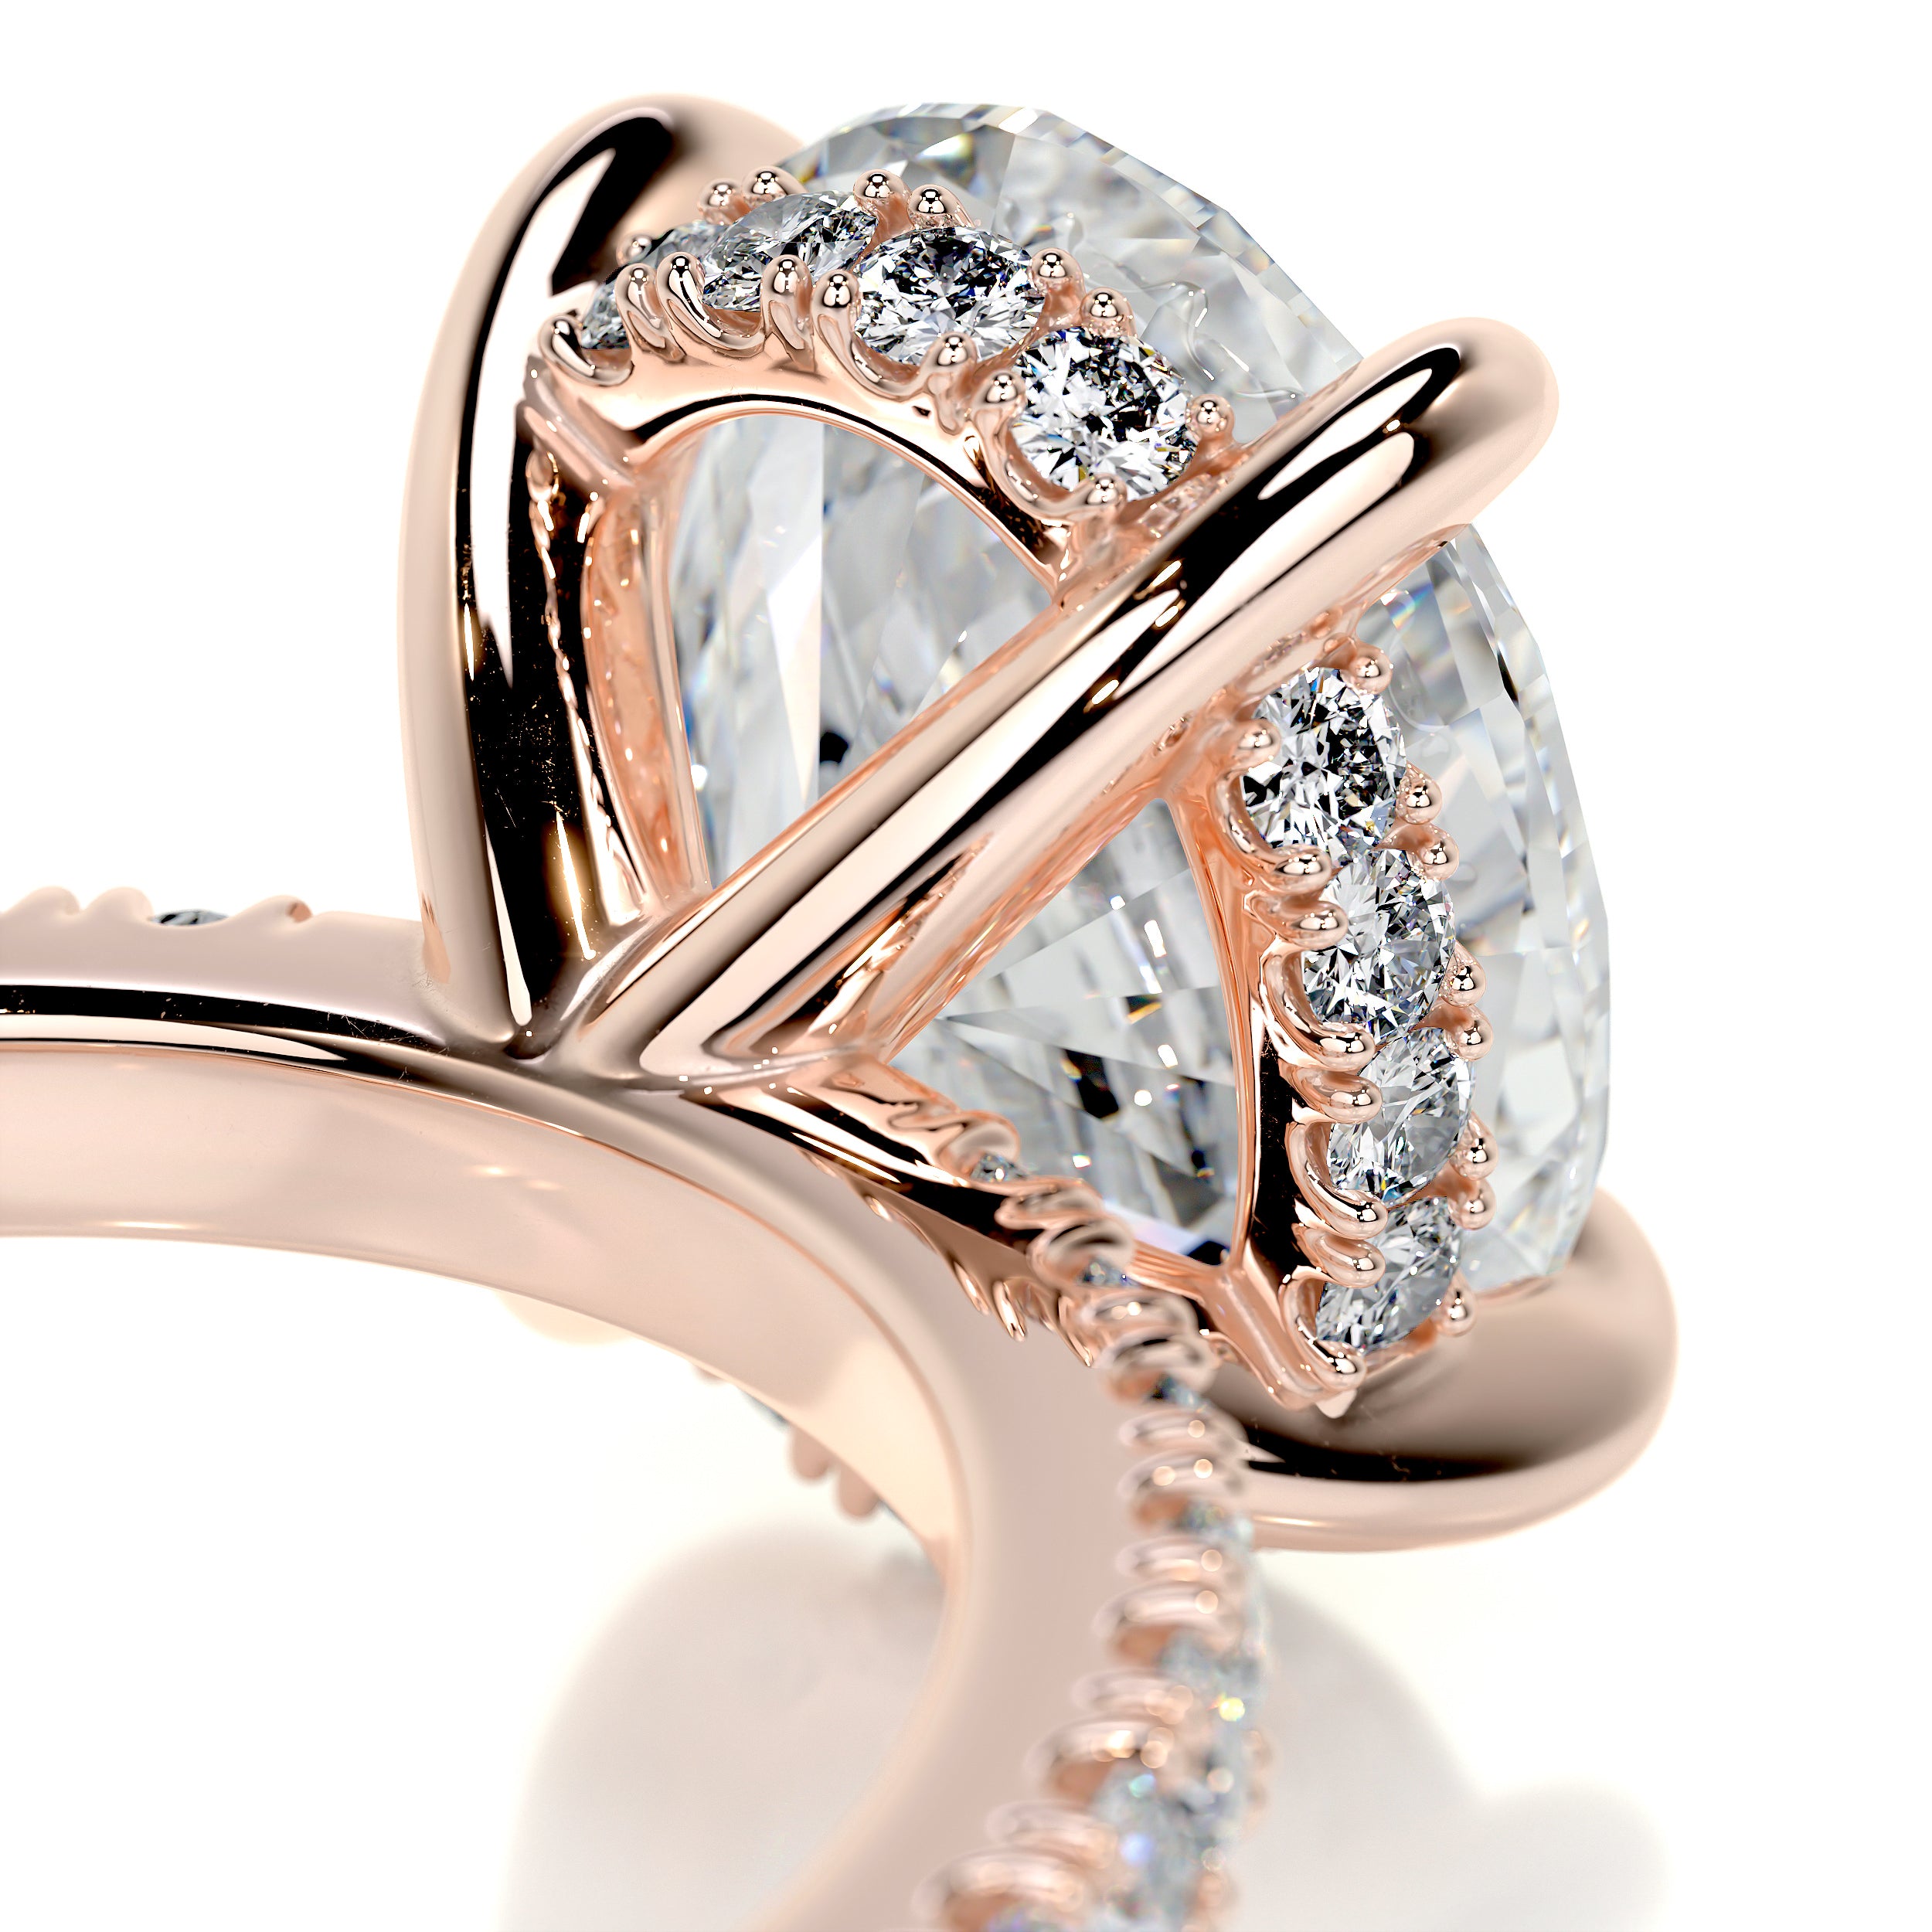 Lucy Diamond Engagement Ring   (2.5 Carat) -14K Rose Gold